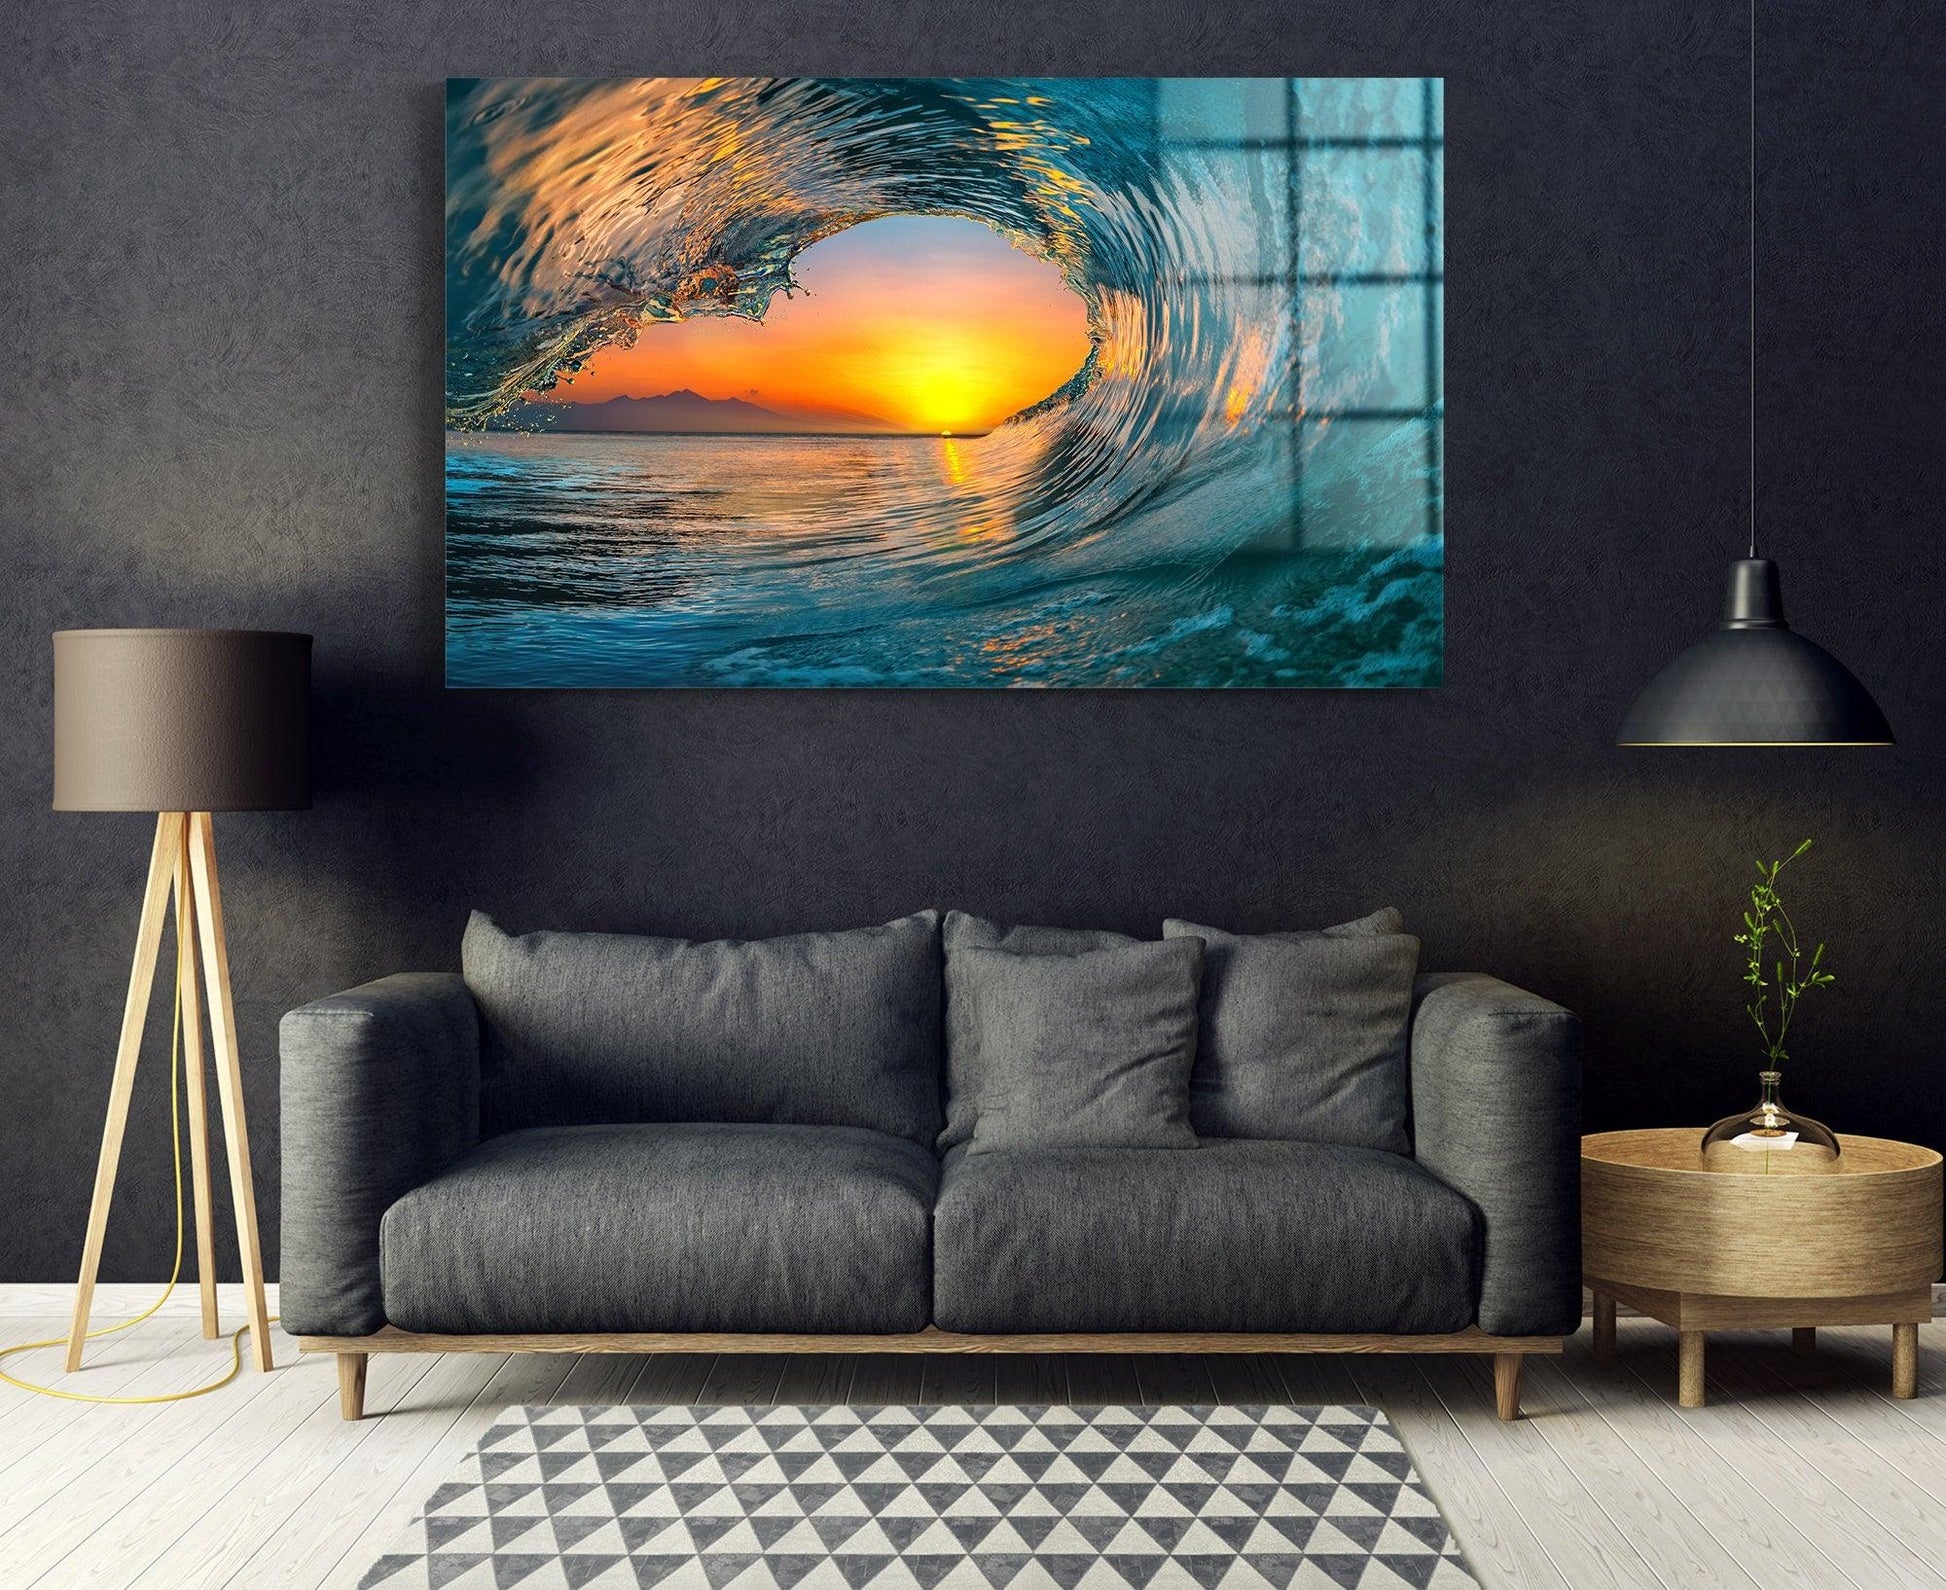 Splash glass wall art| Colorful Ocean Wave Wall Decor, Ocean Wave Wall Art, Storm Canvas Print, Sea Wall Art, Rolling Wave glass printing - TrendiArt